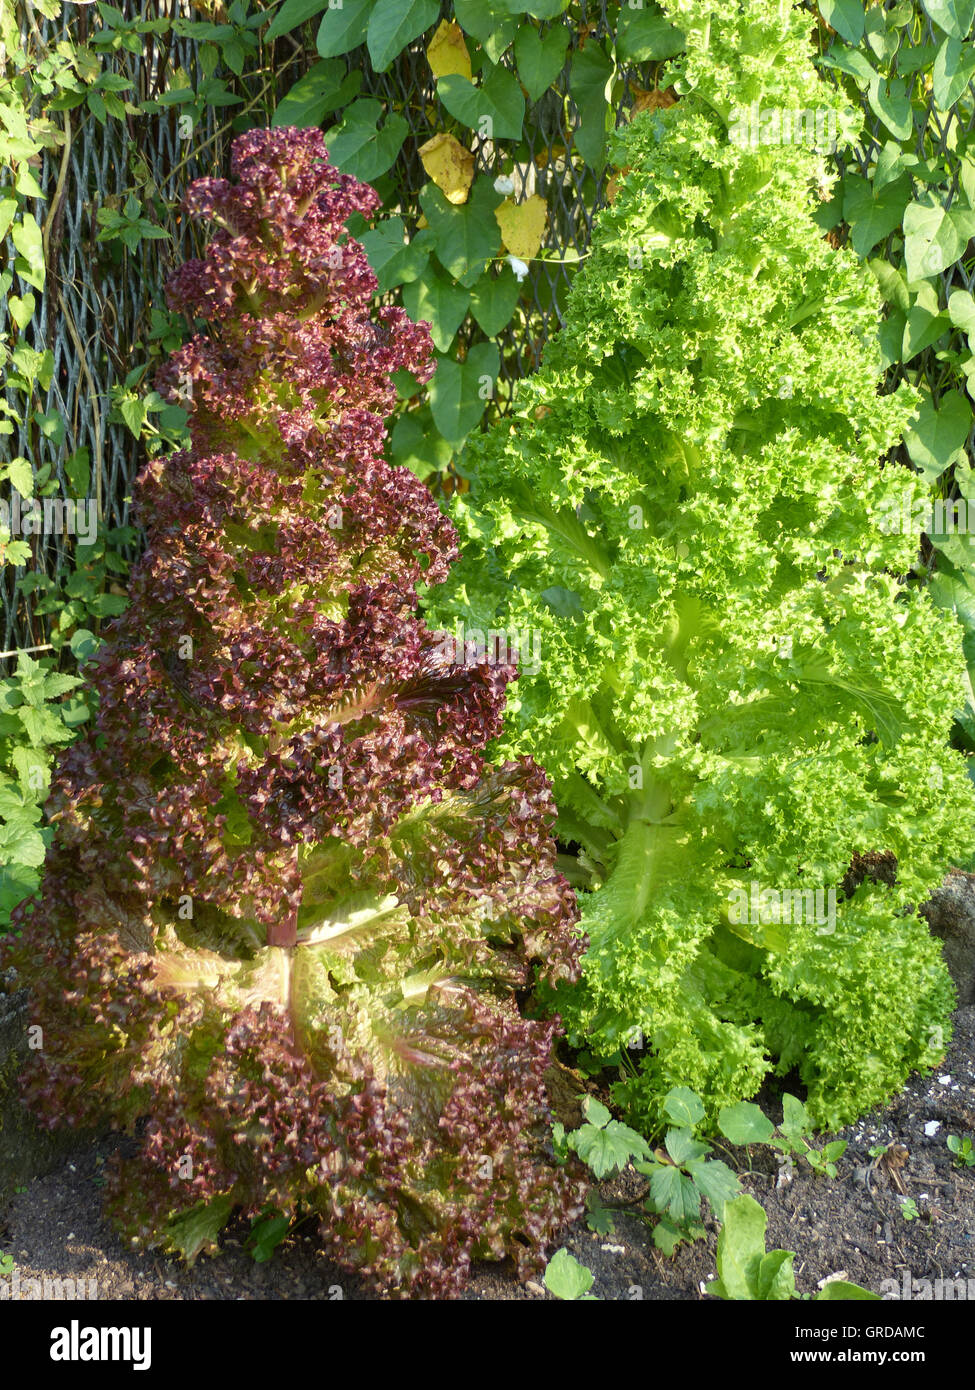 Lanky Salad Stock Photo